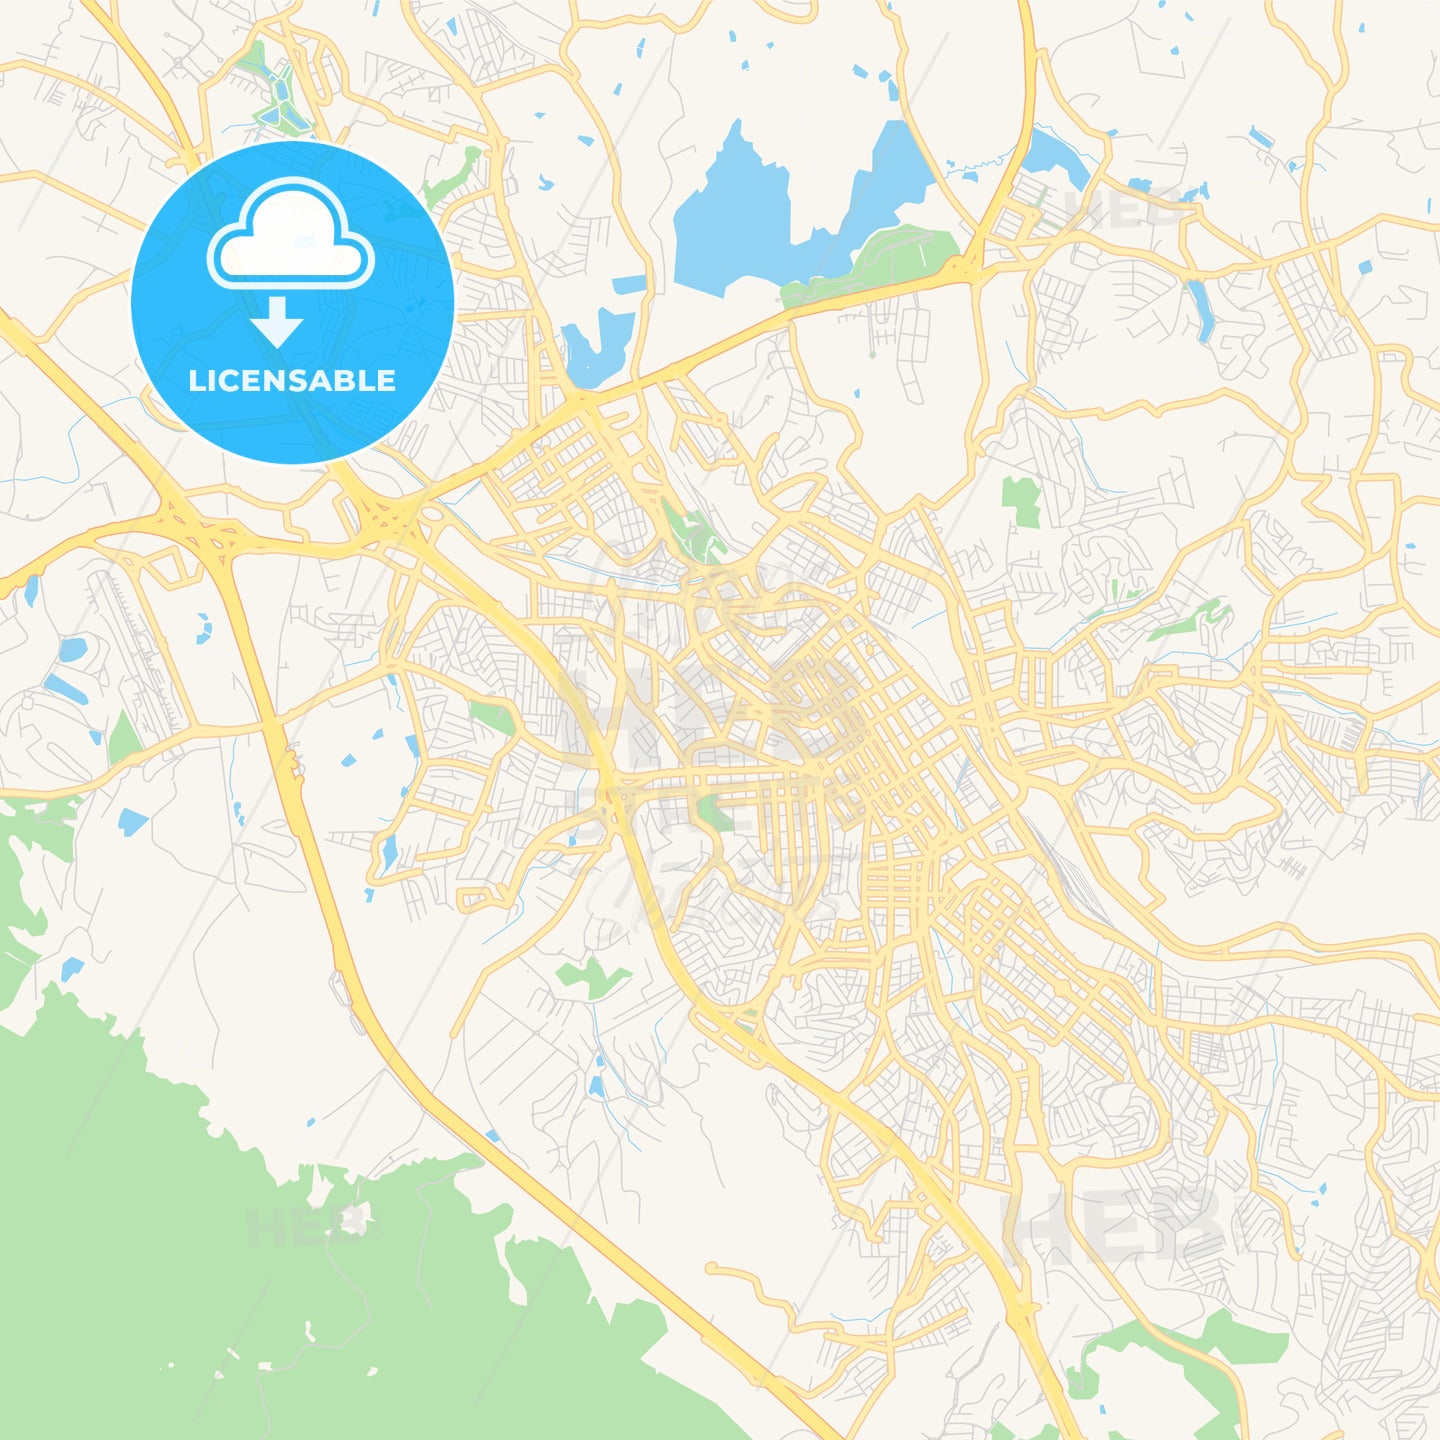 Printable street map of Jundiai, Brazil